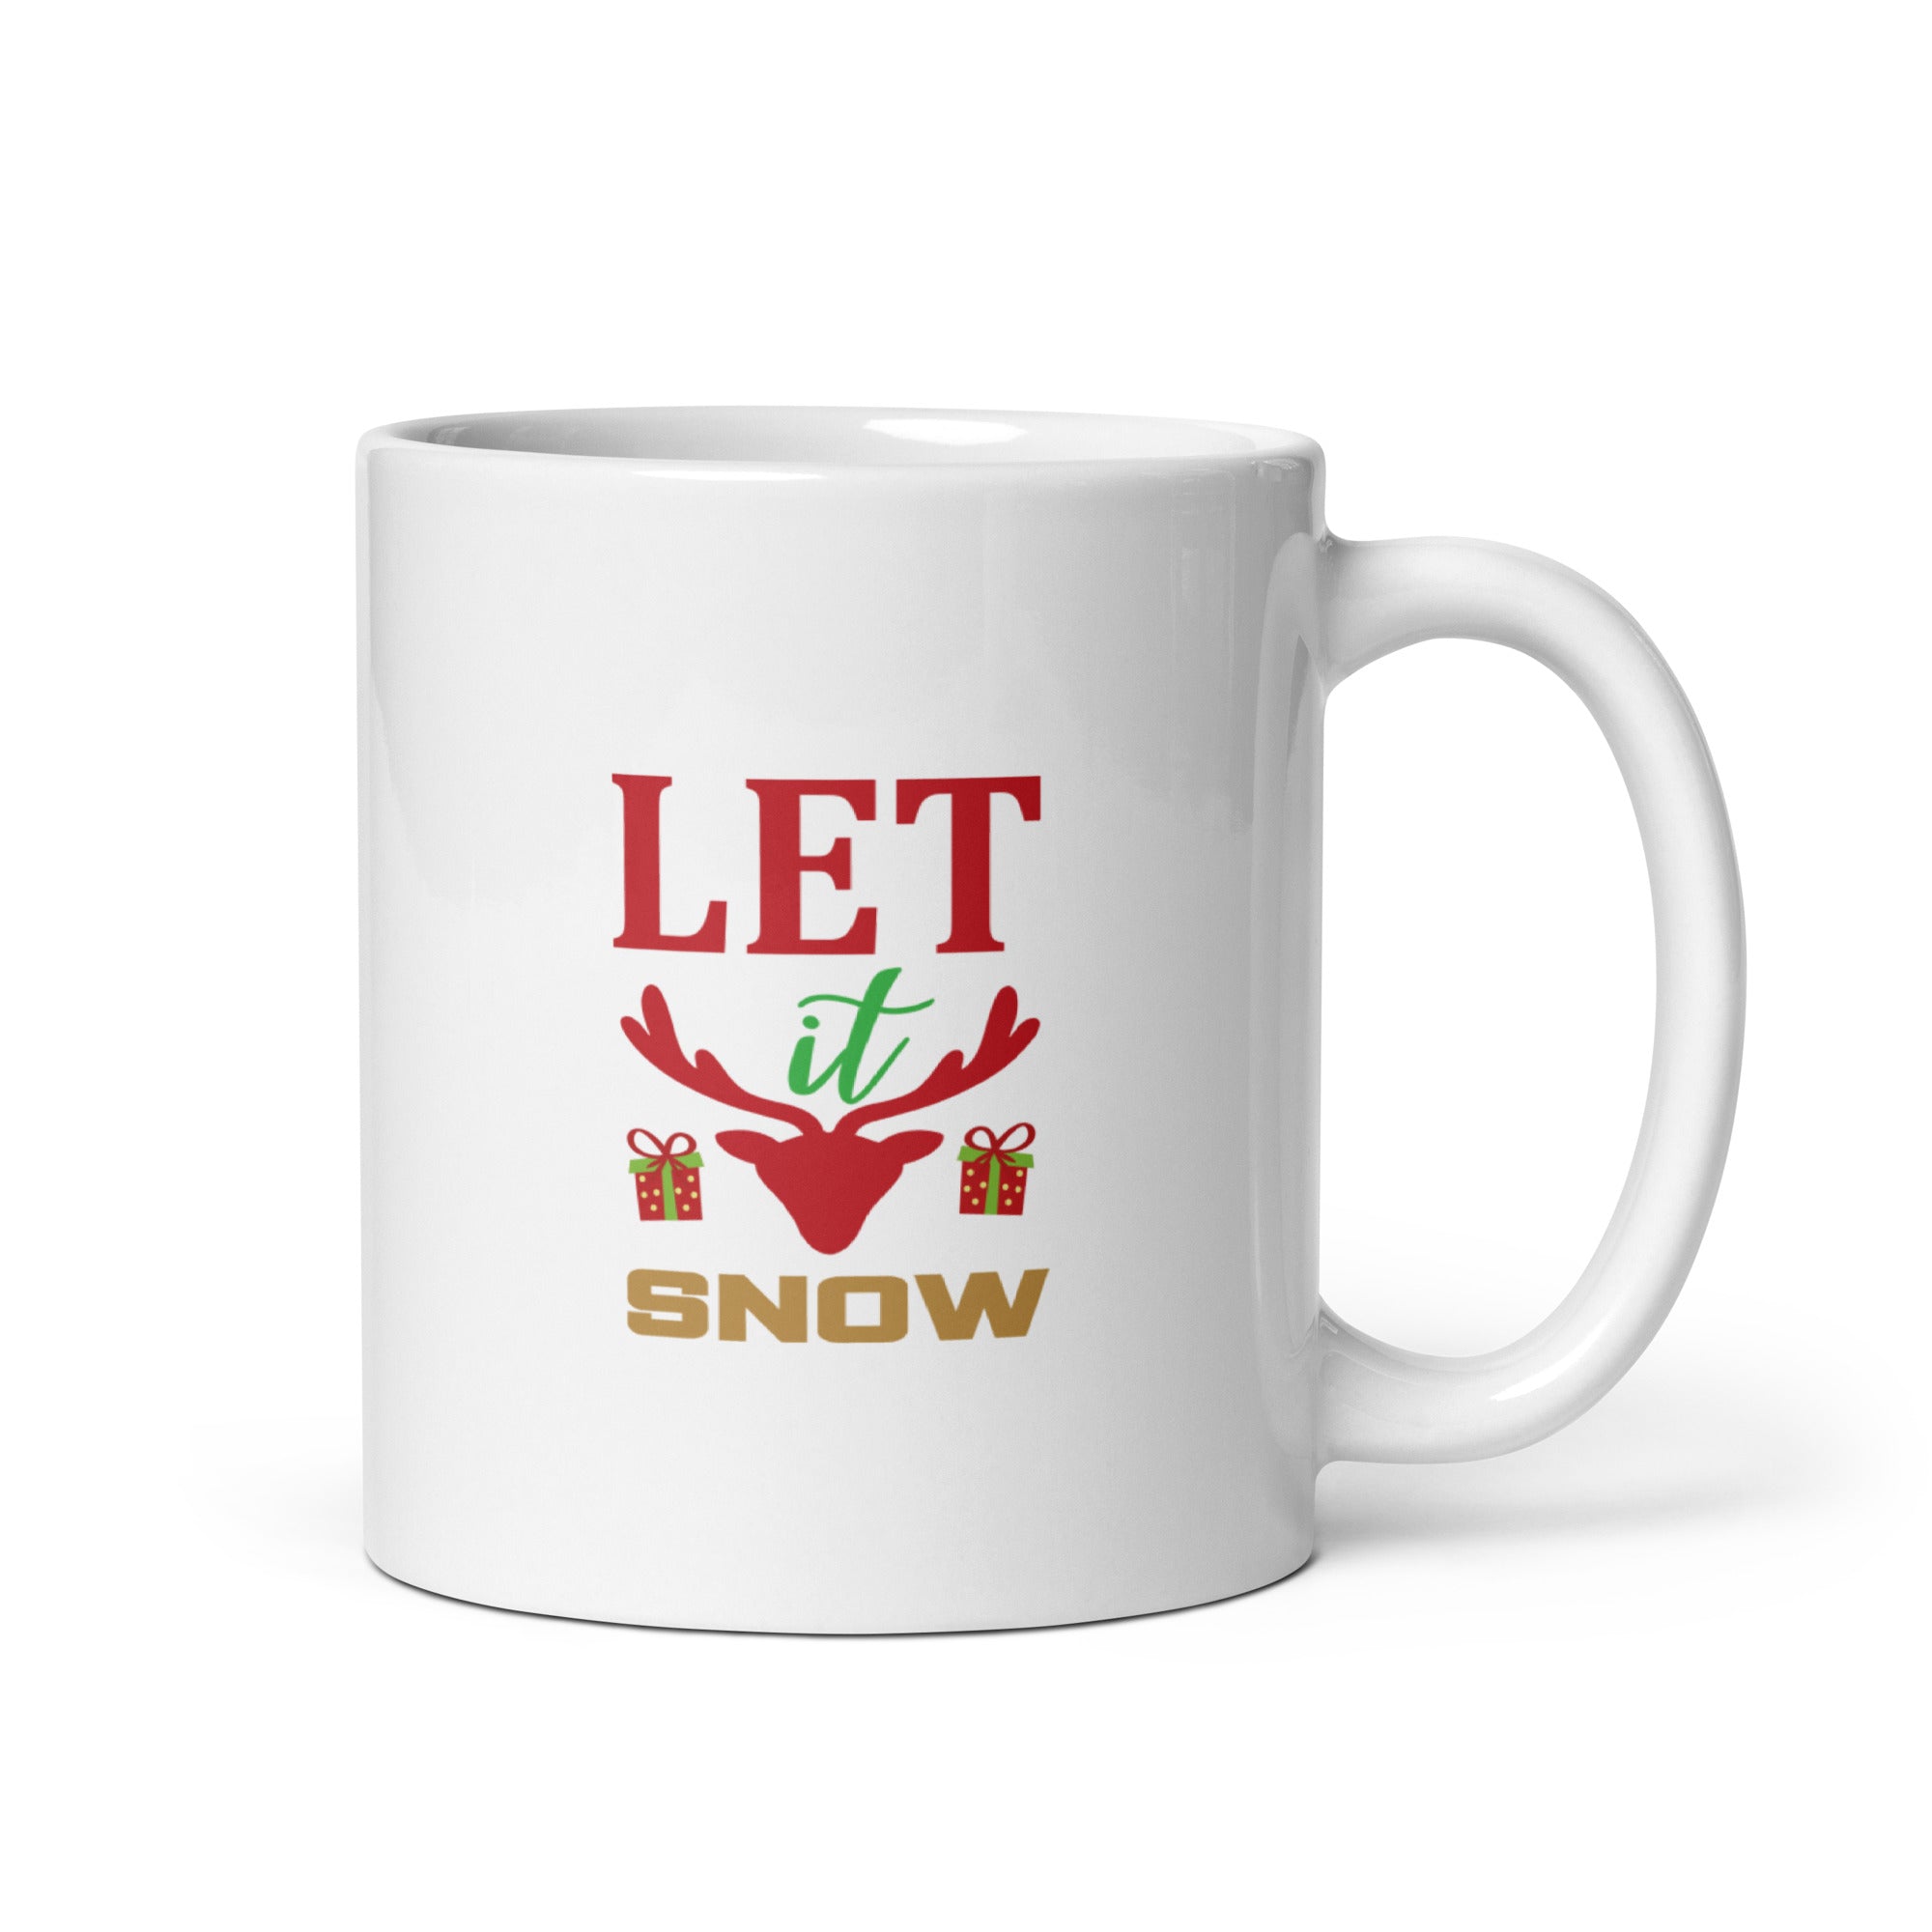 Let It Snow - White glossy mug